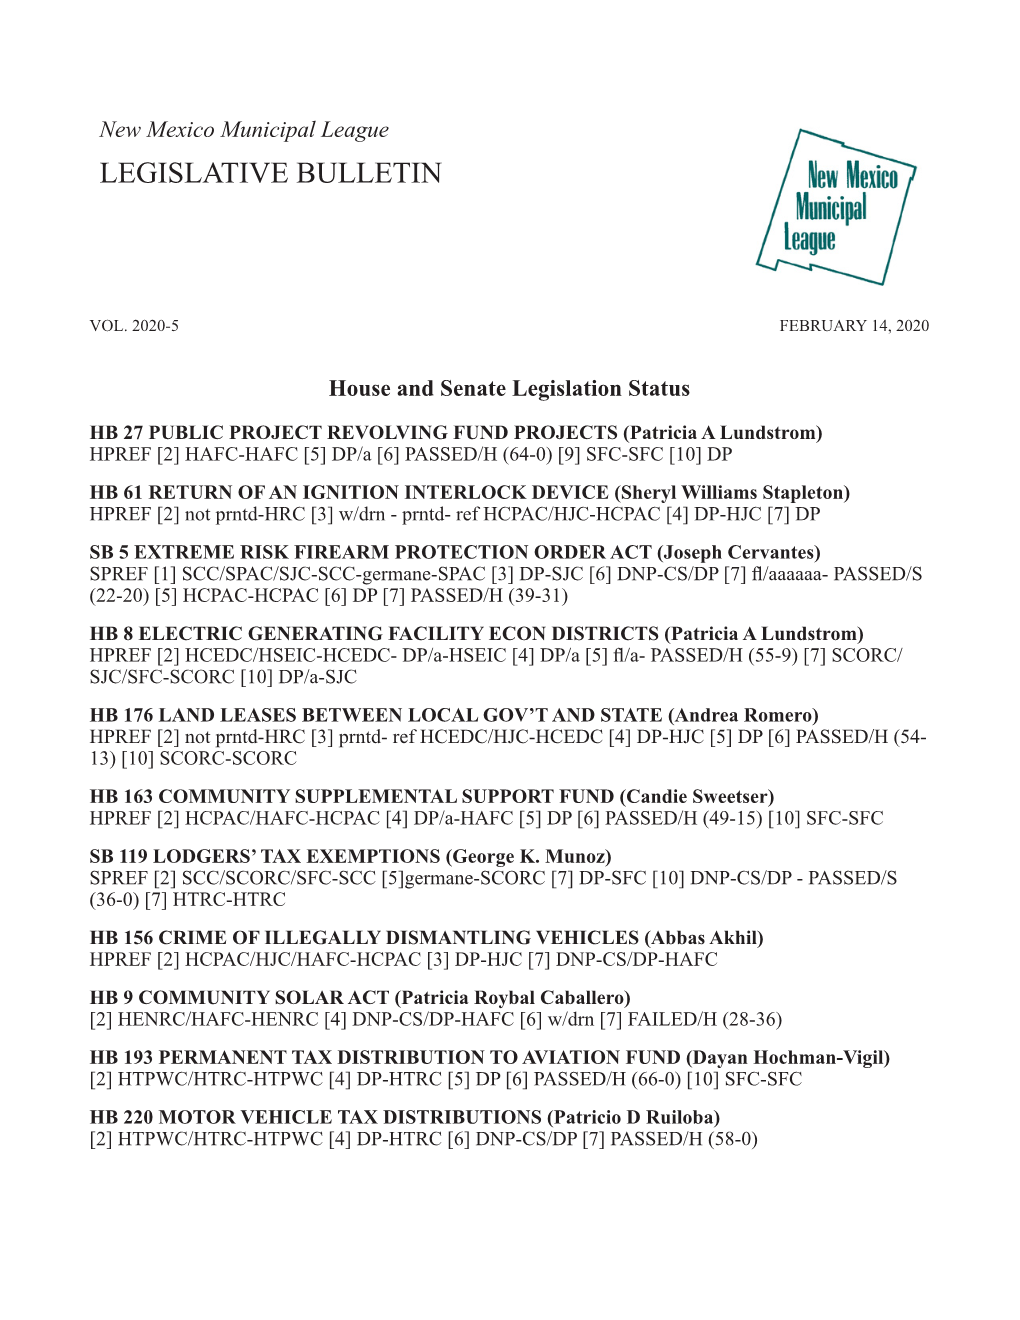 Legislative Bulletin Vol. 2020-5